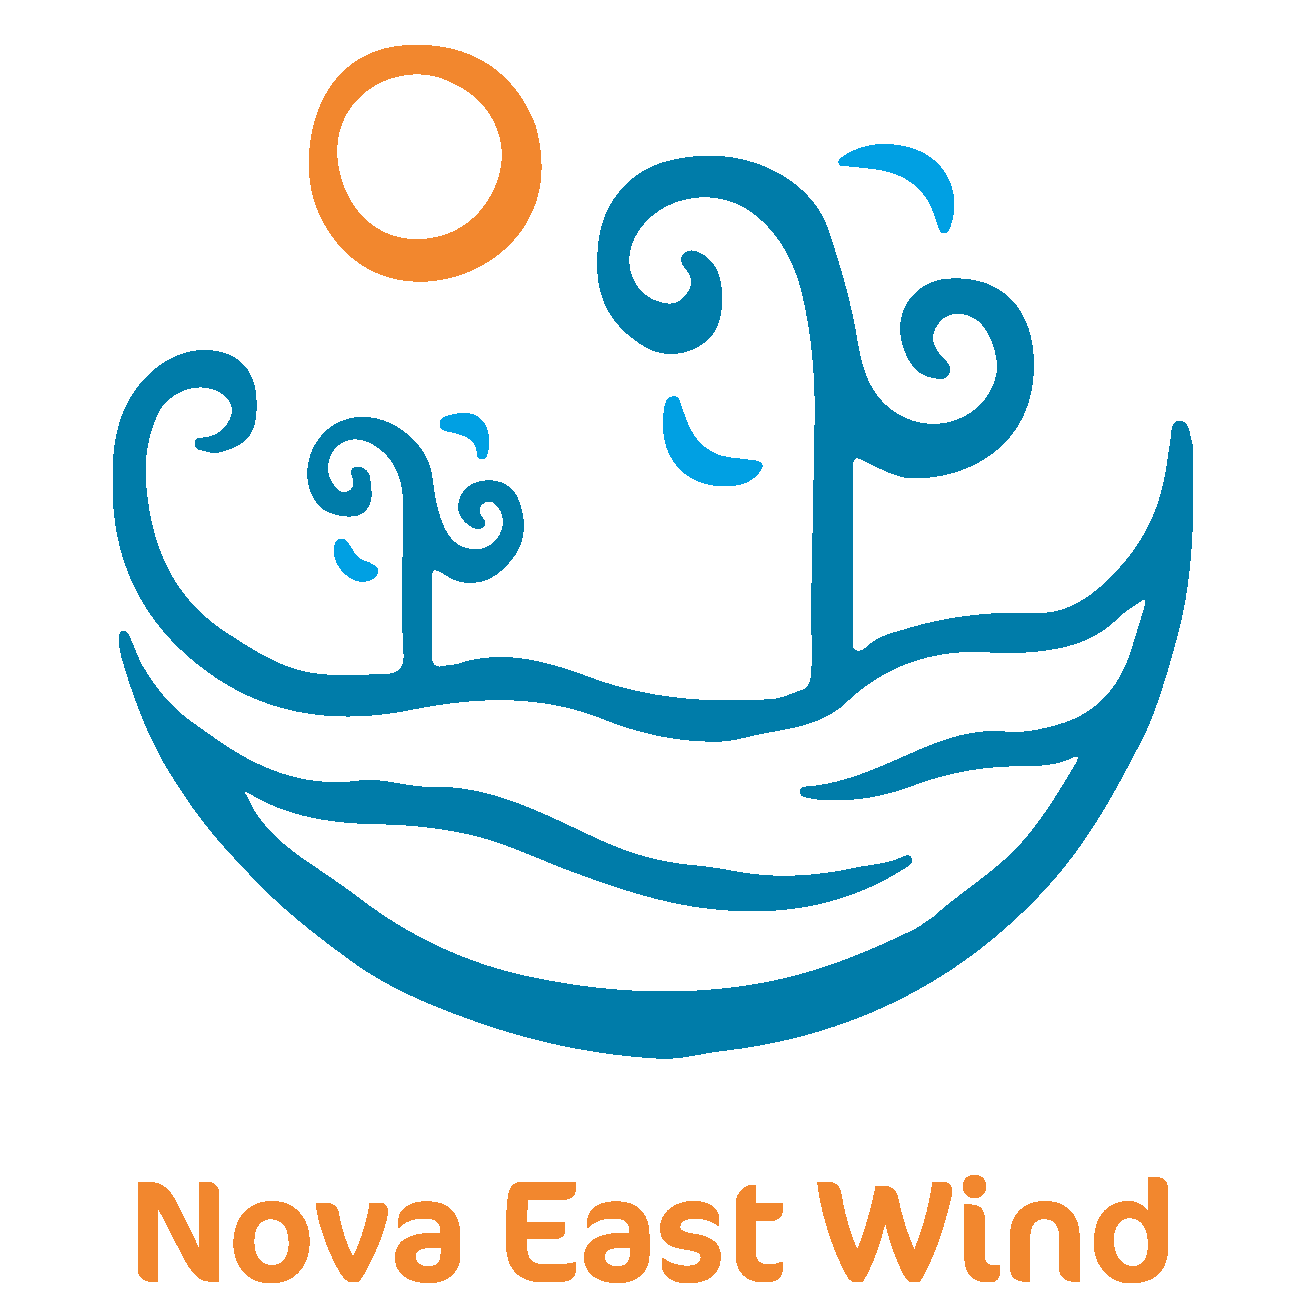 Nova East Wind